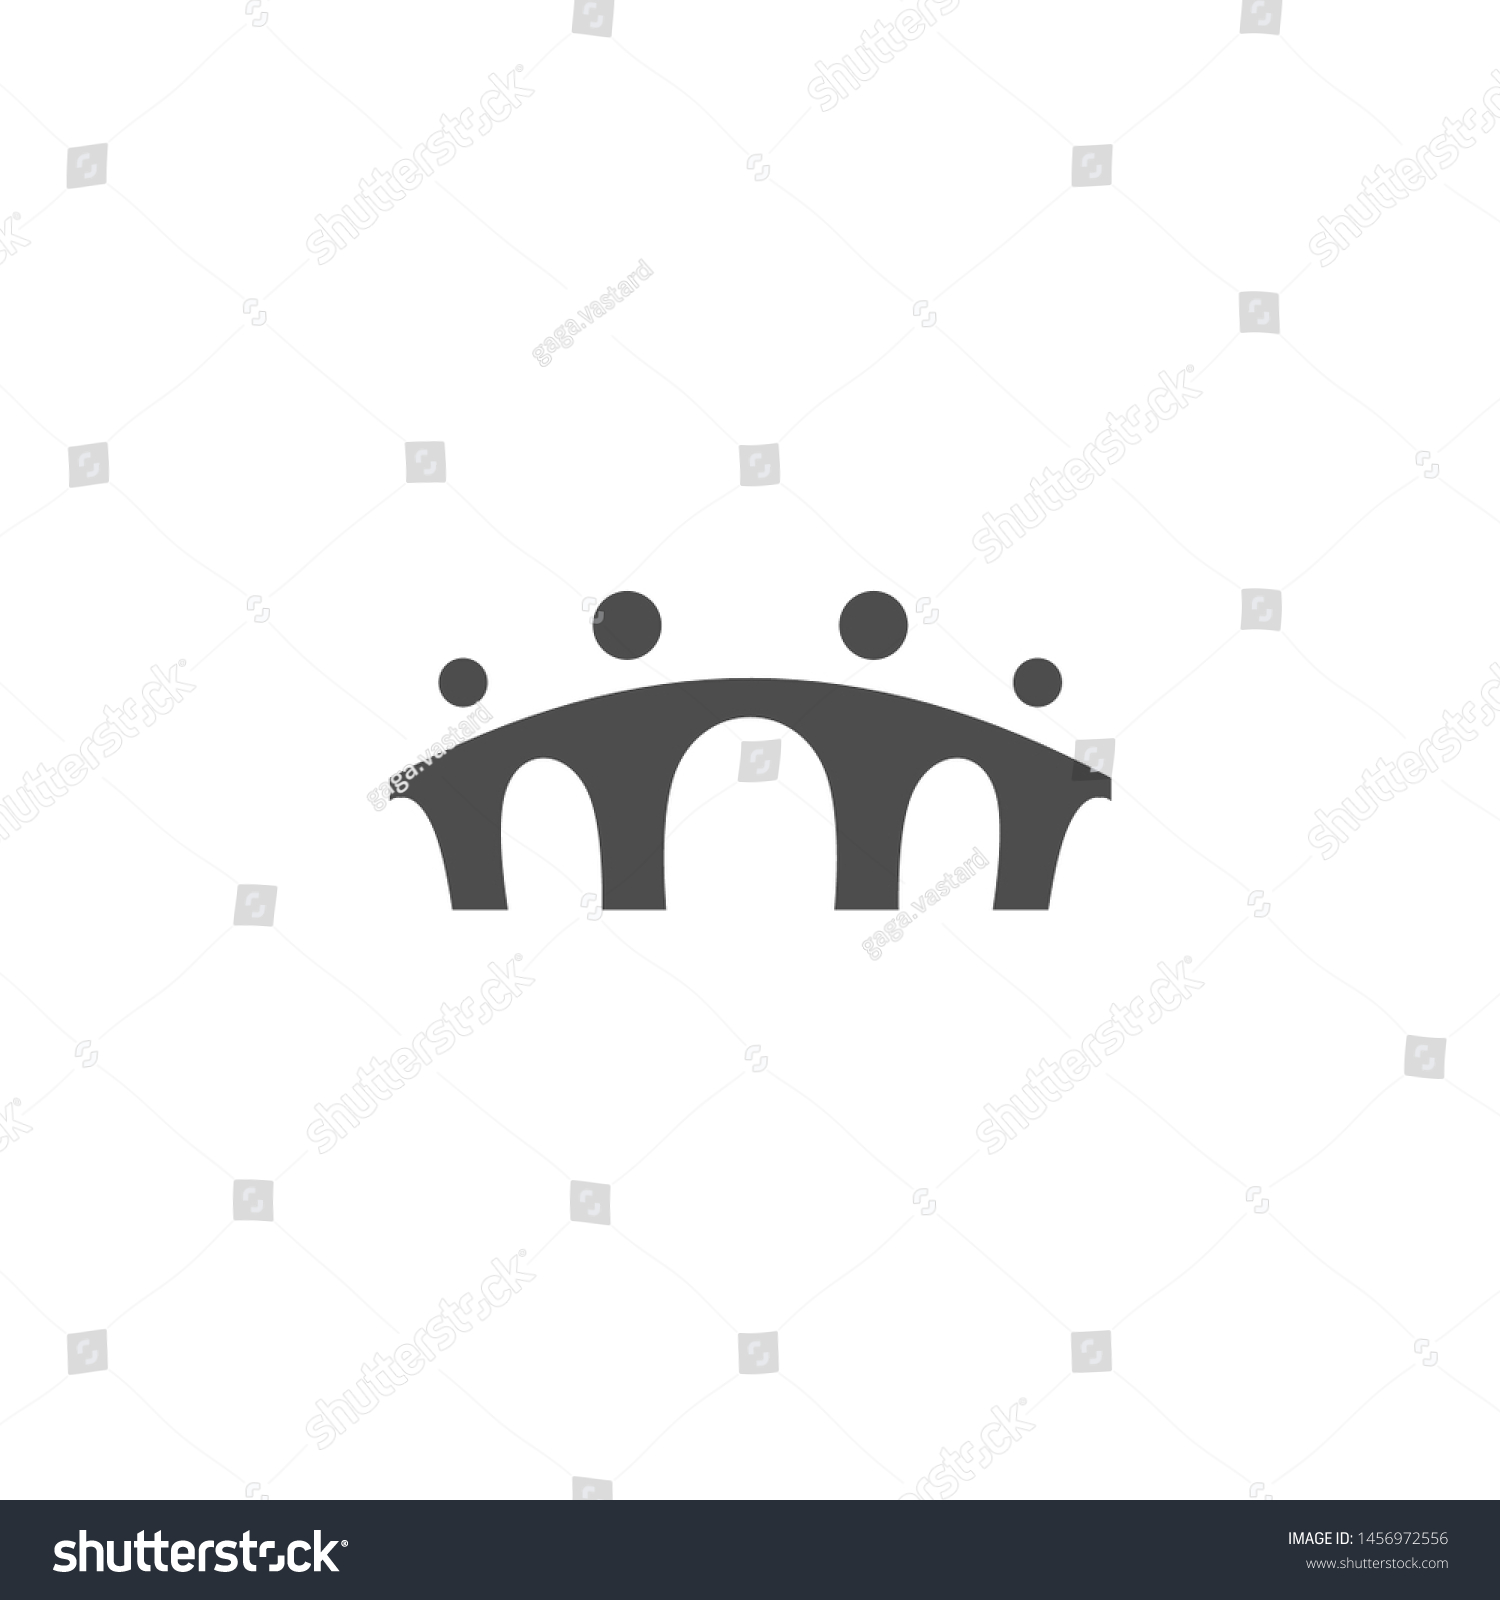 bridge people family together human unity logo vector icon #1456972556